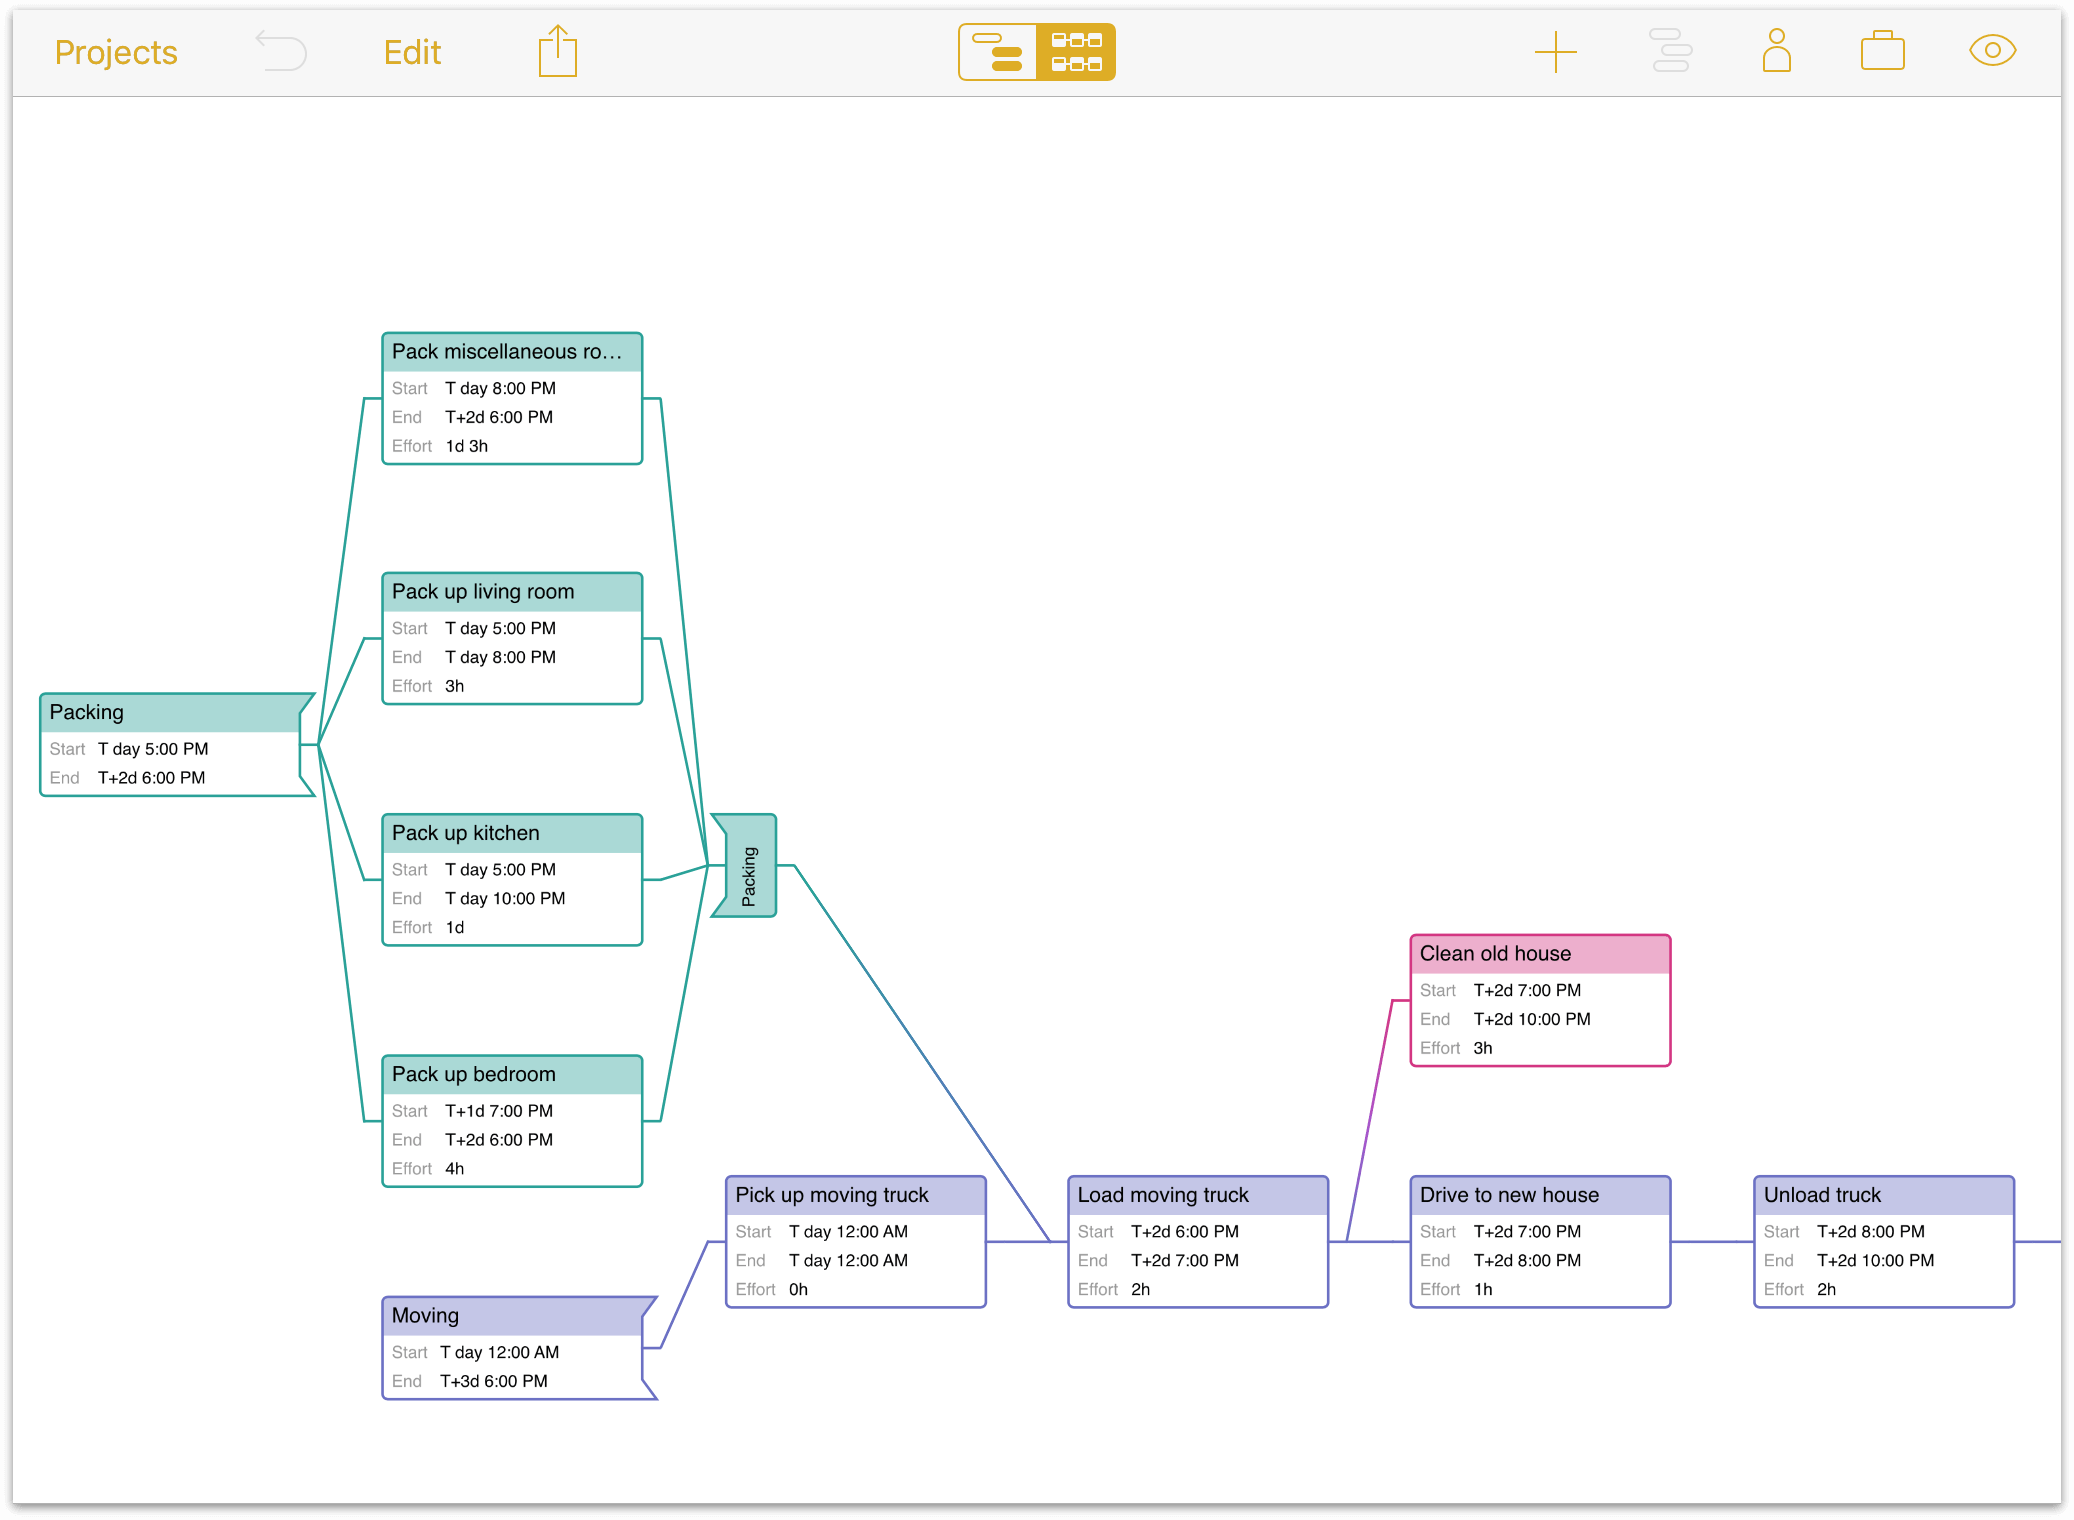 Gantt Chart Network Diagram